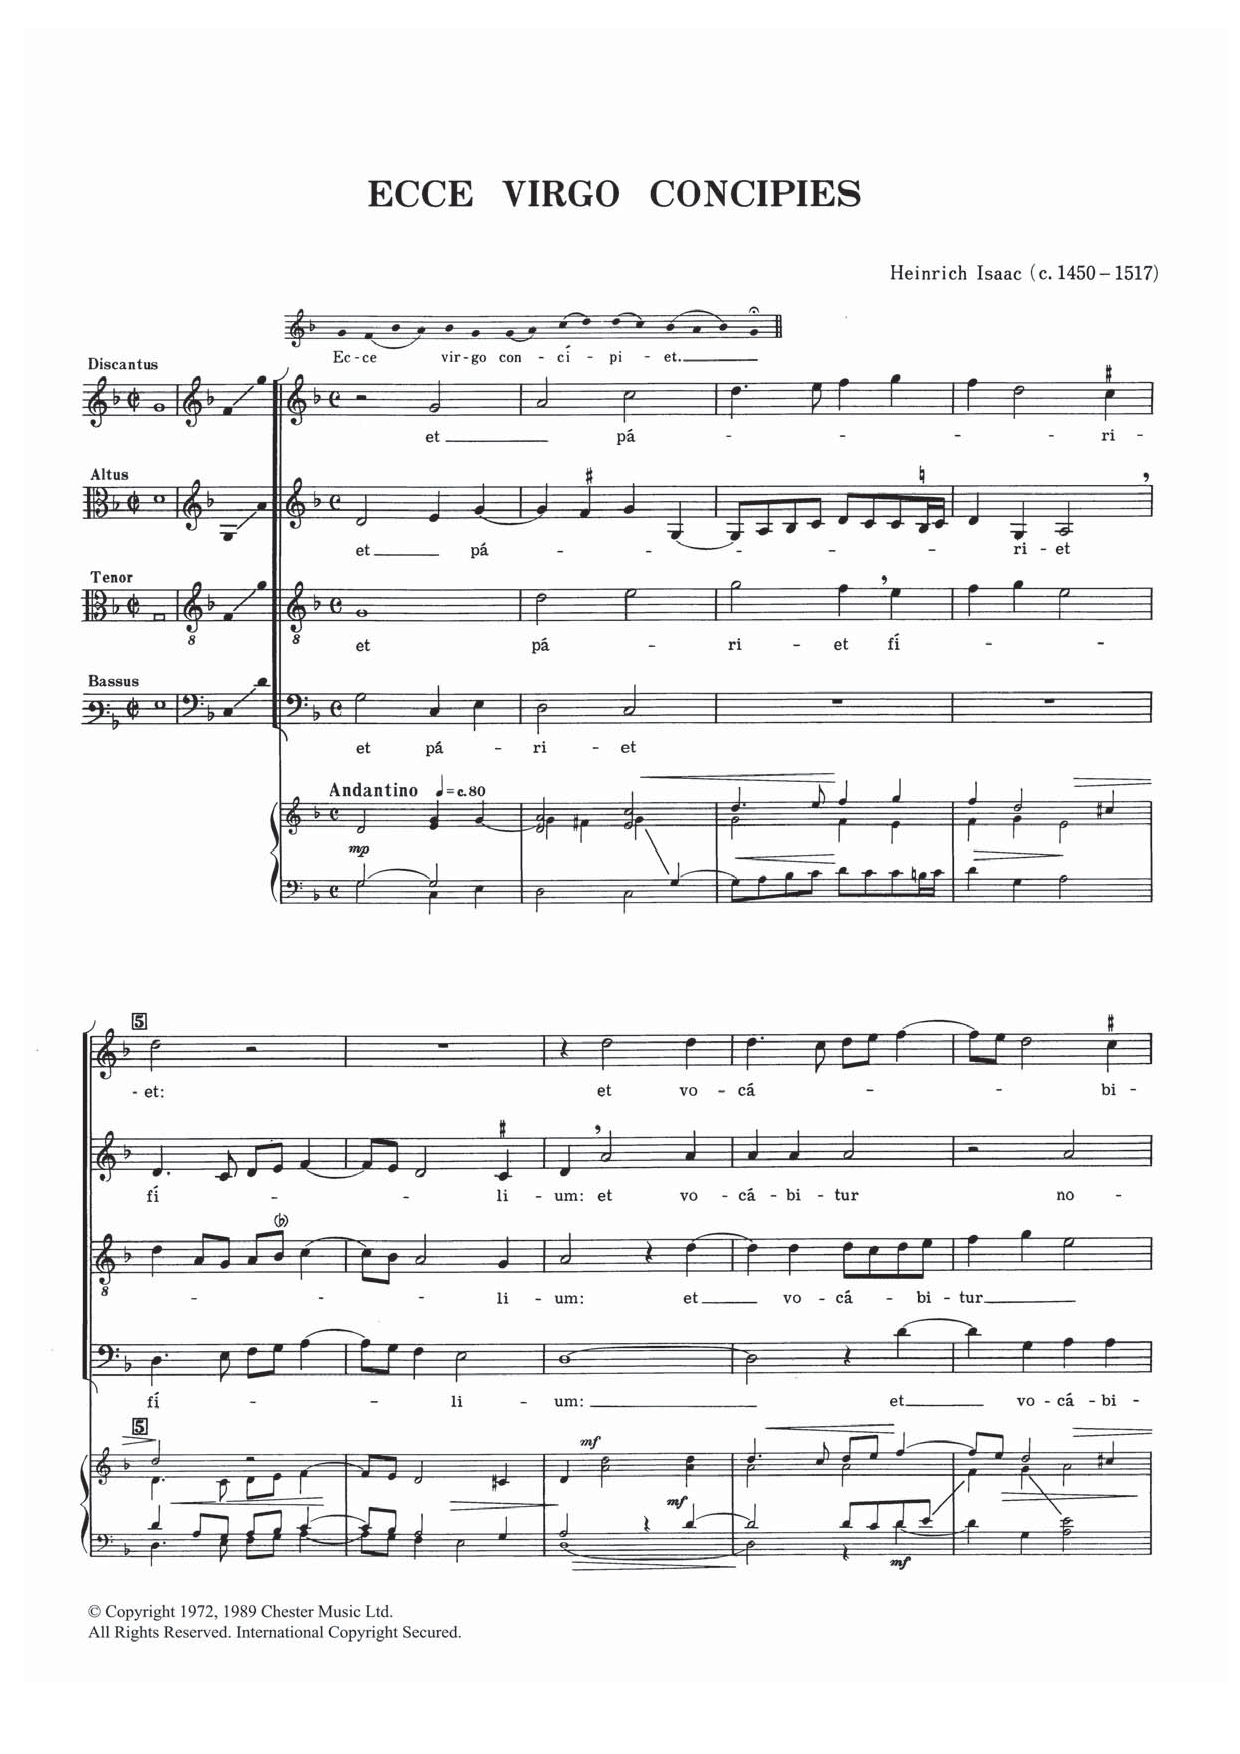 Download Heinrich Isaac Ecce Virgo Concipies Sheet Music